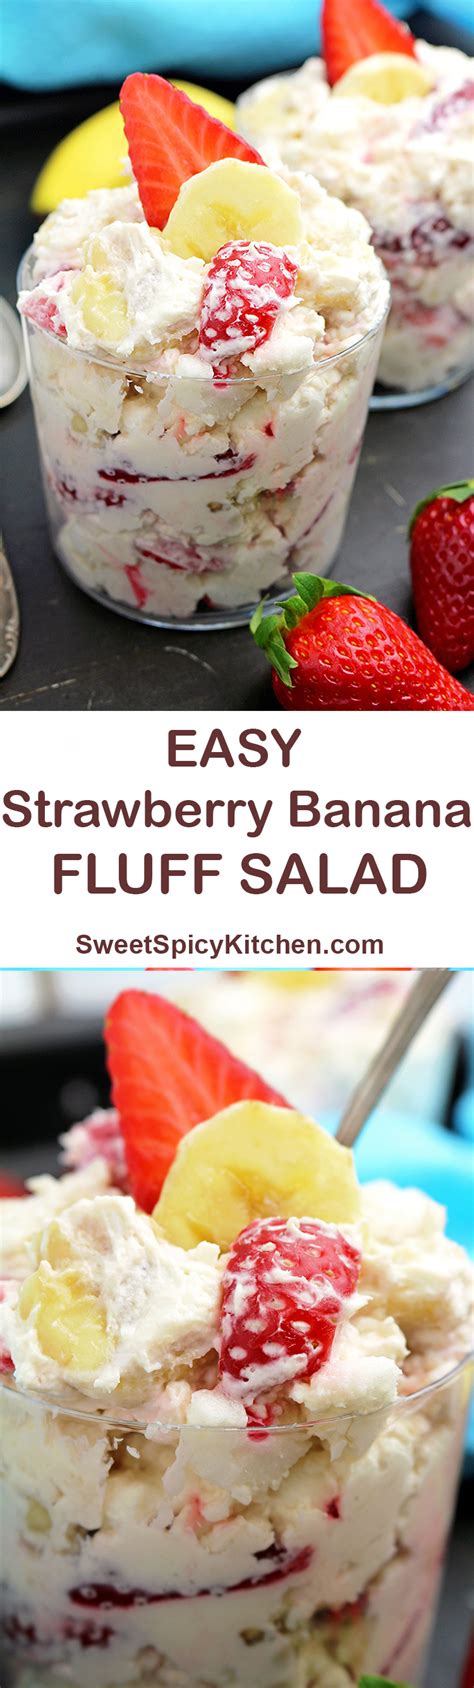 Easy Strawberry Banana Fluff Salad Sweet Spicy Kitchen